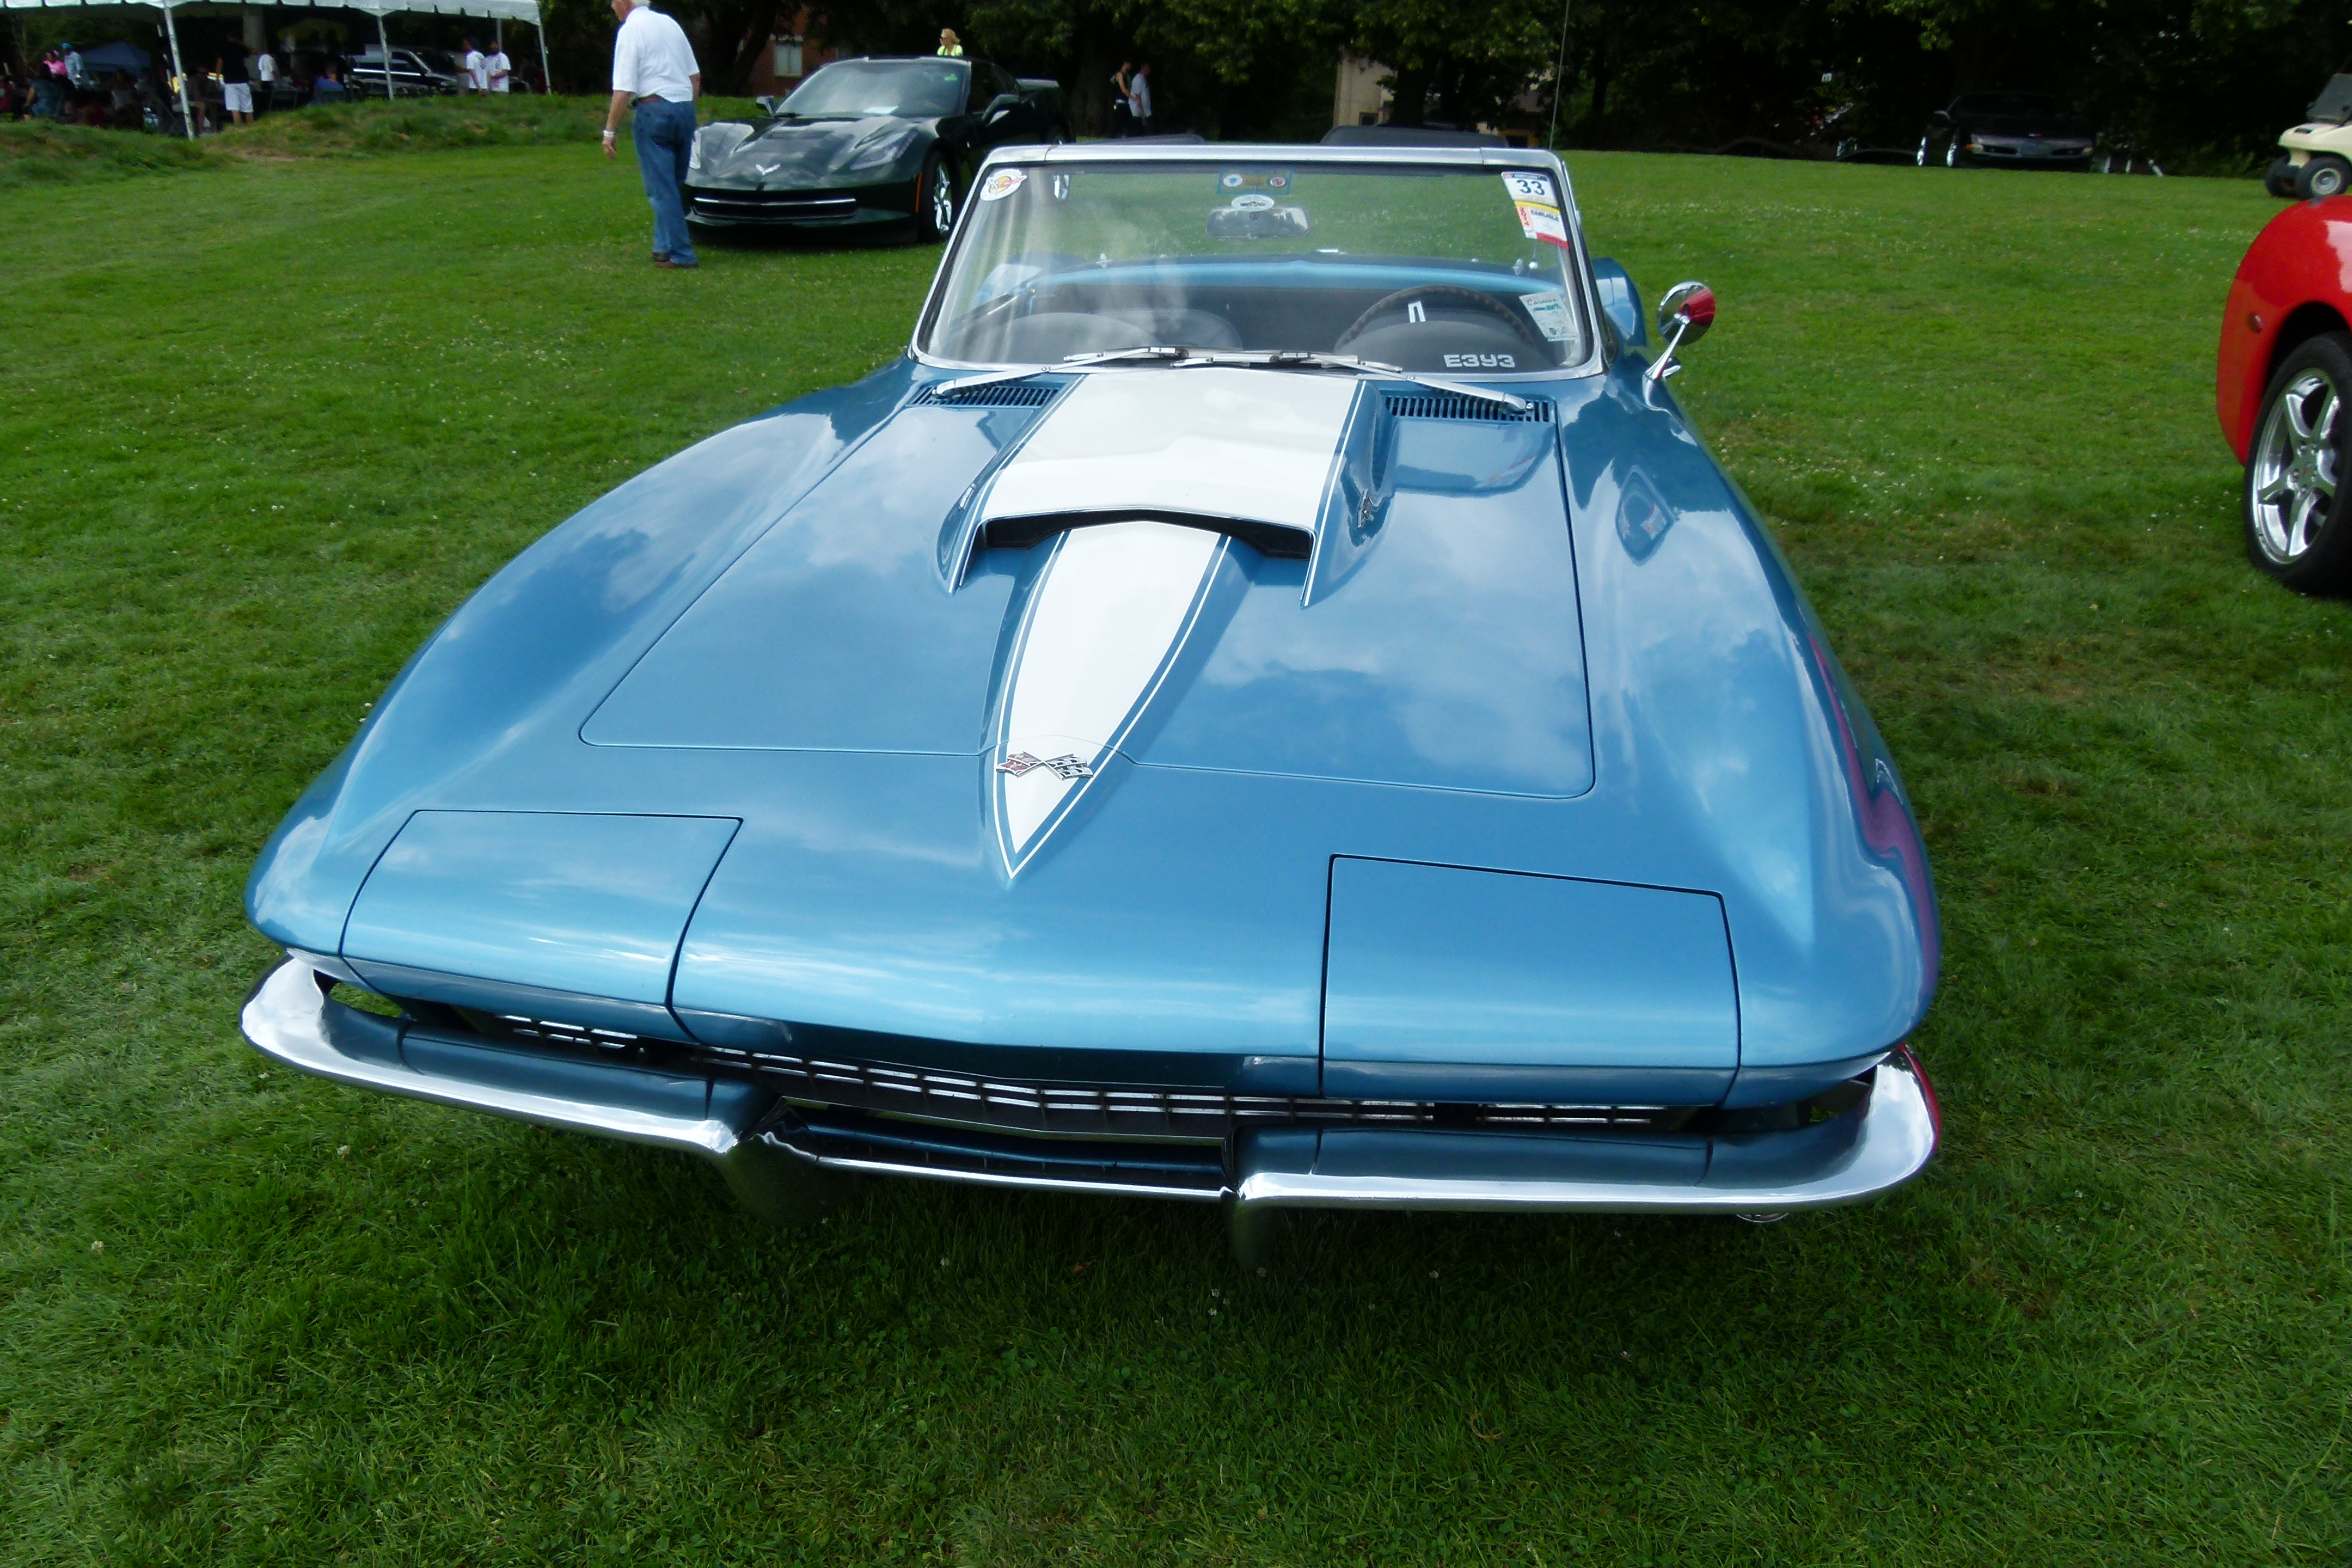 A 1960s Corvette convertible ready to strike.